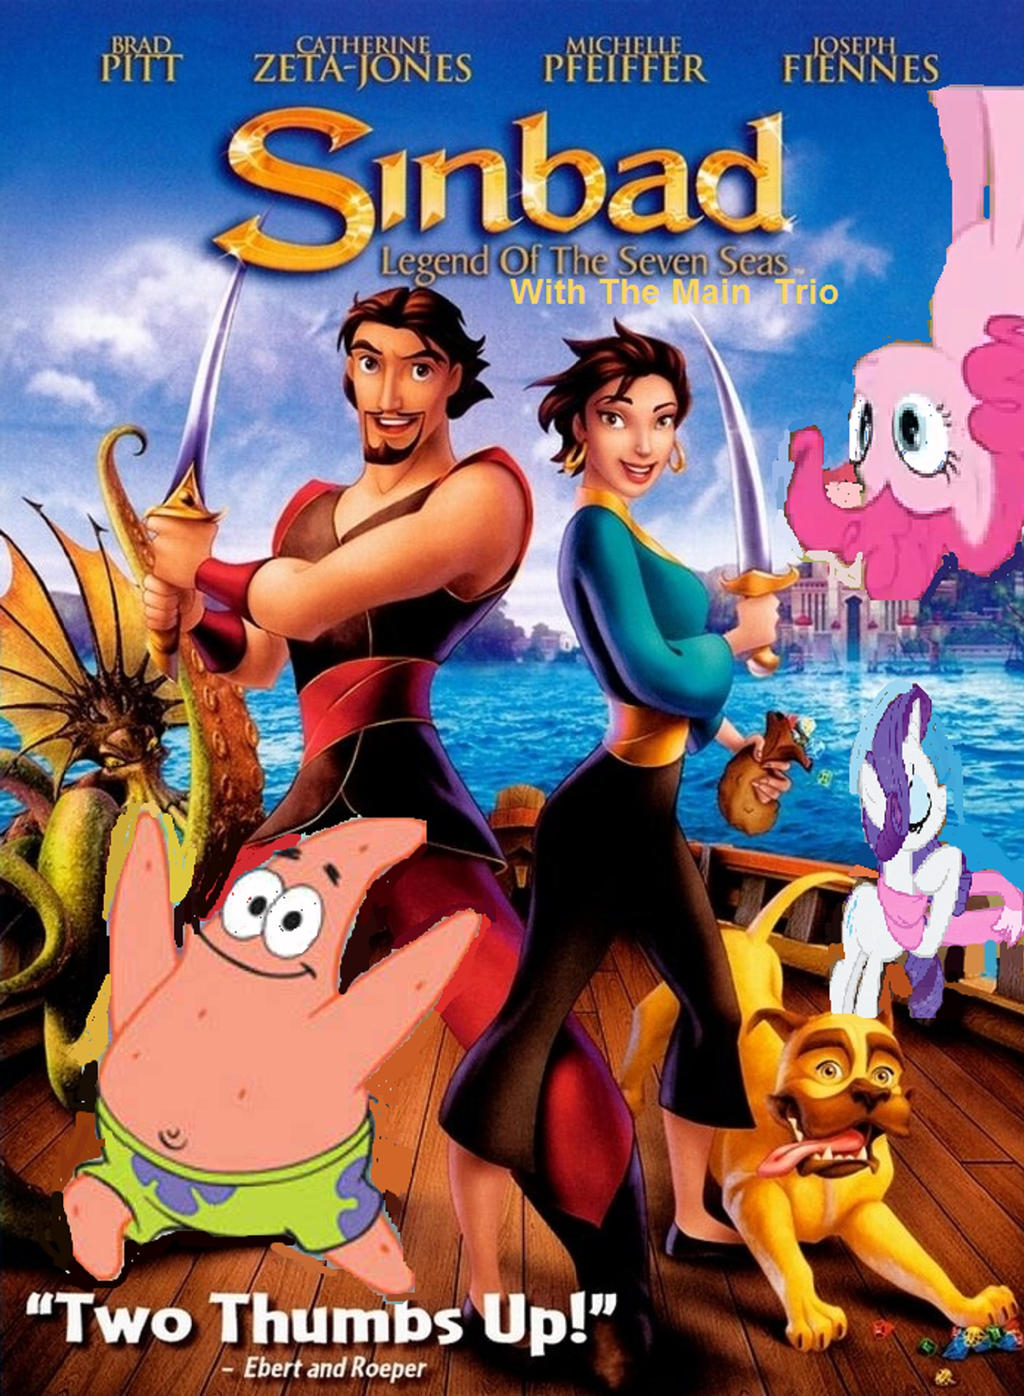 Sinbad legend of the seven seas with the main trio